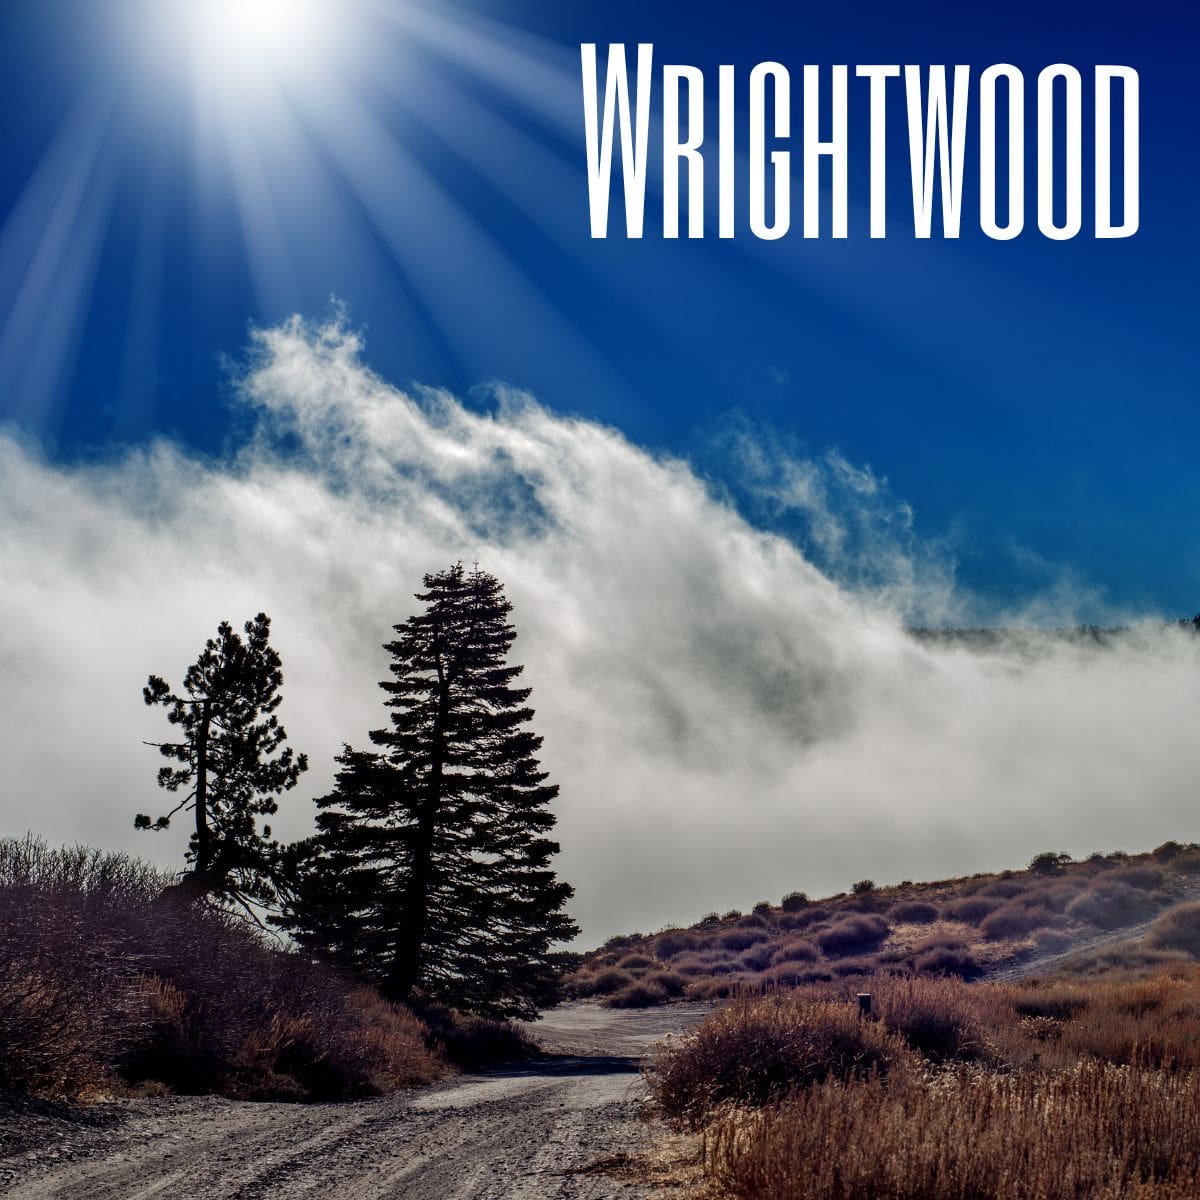 Wrightwood, California